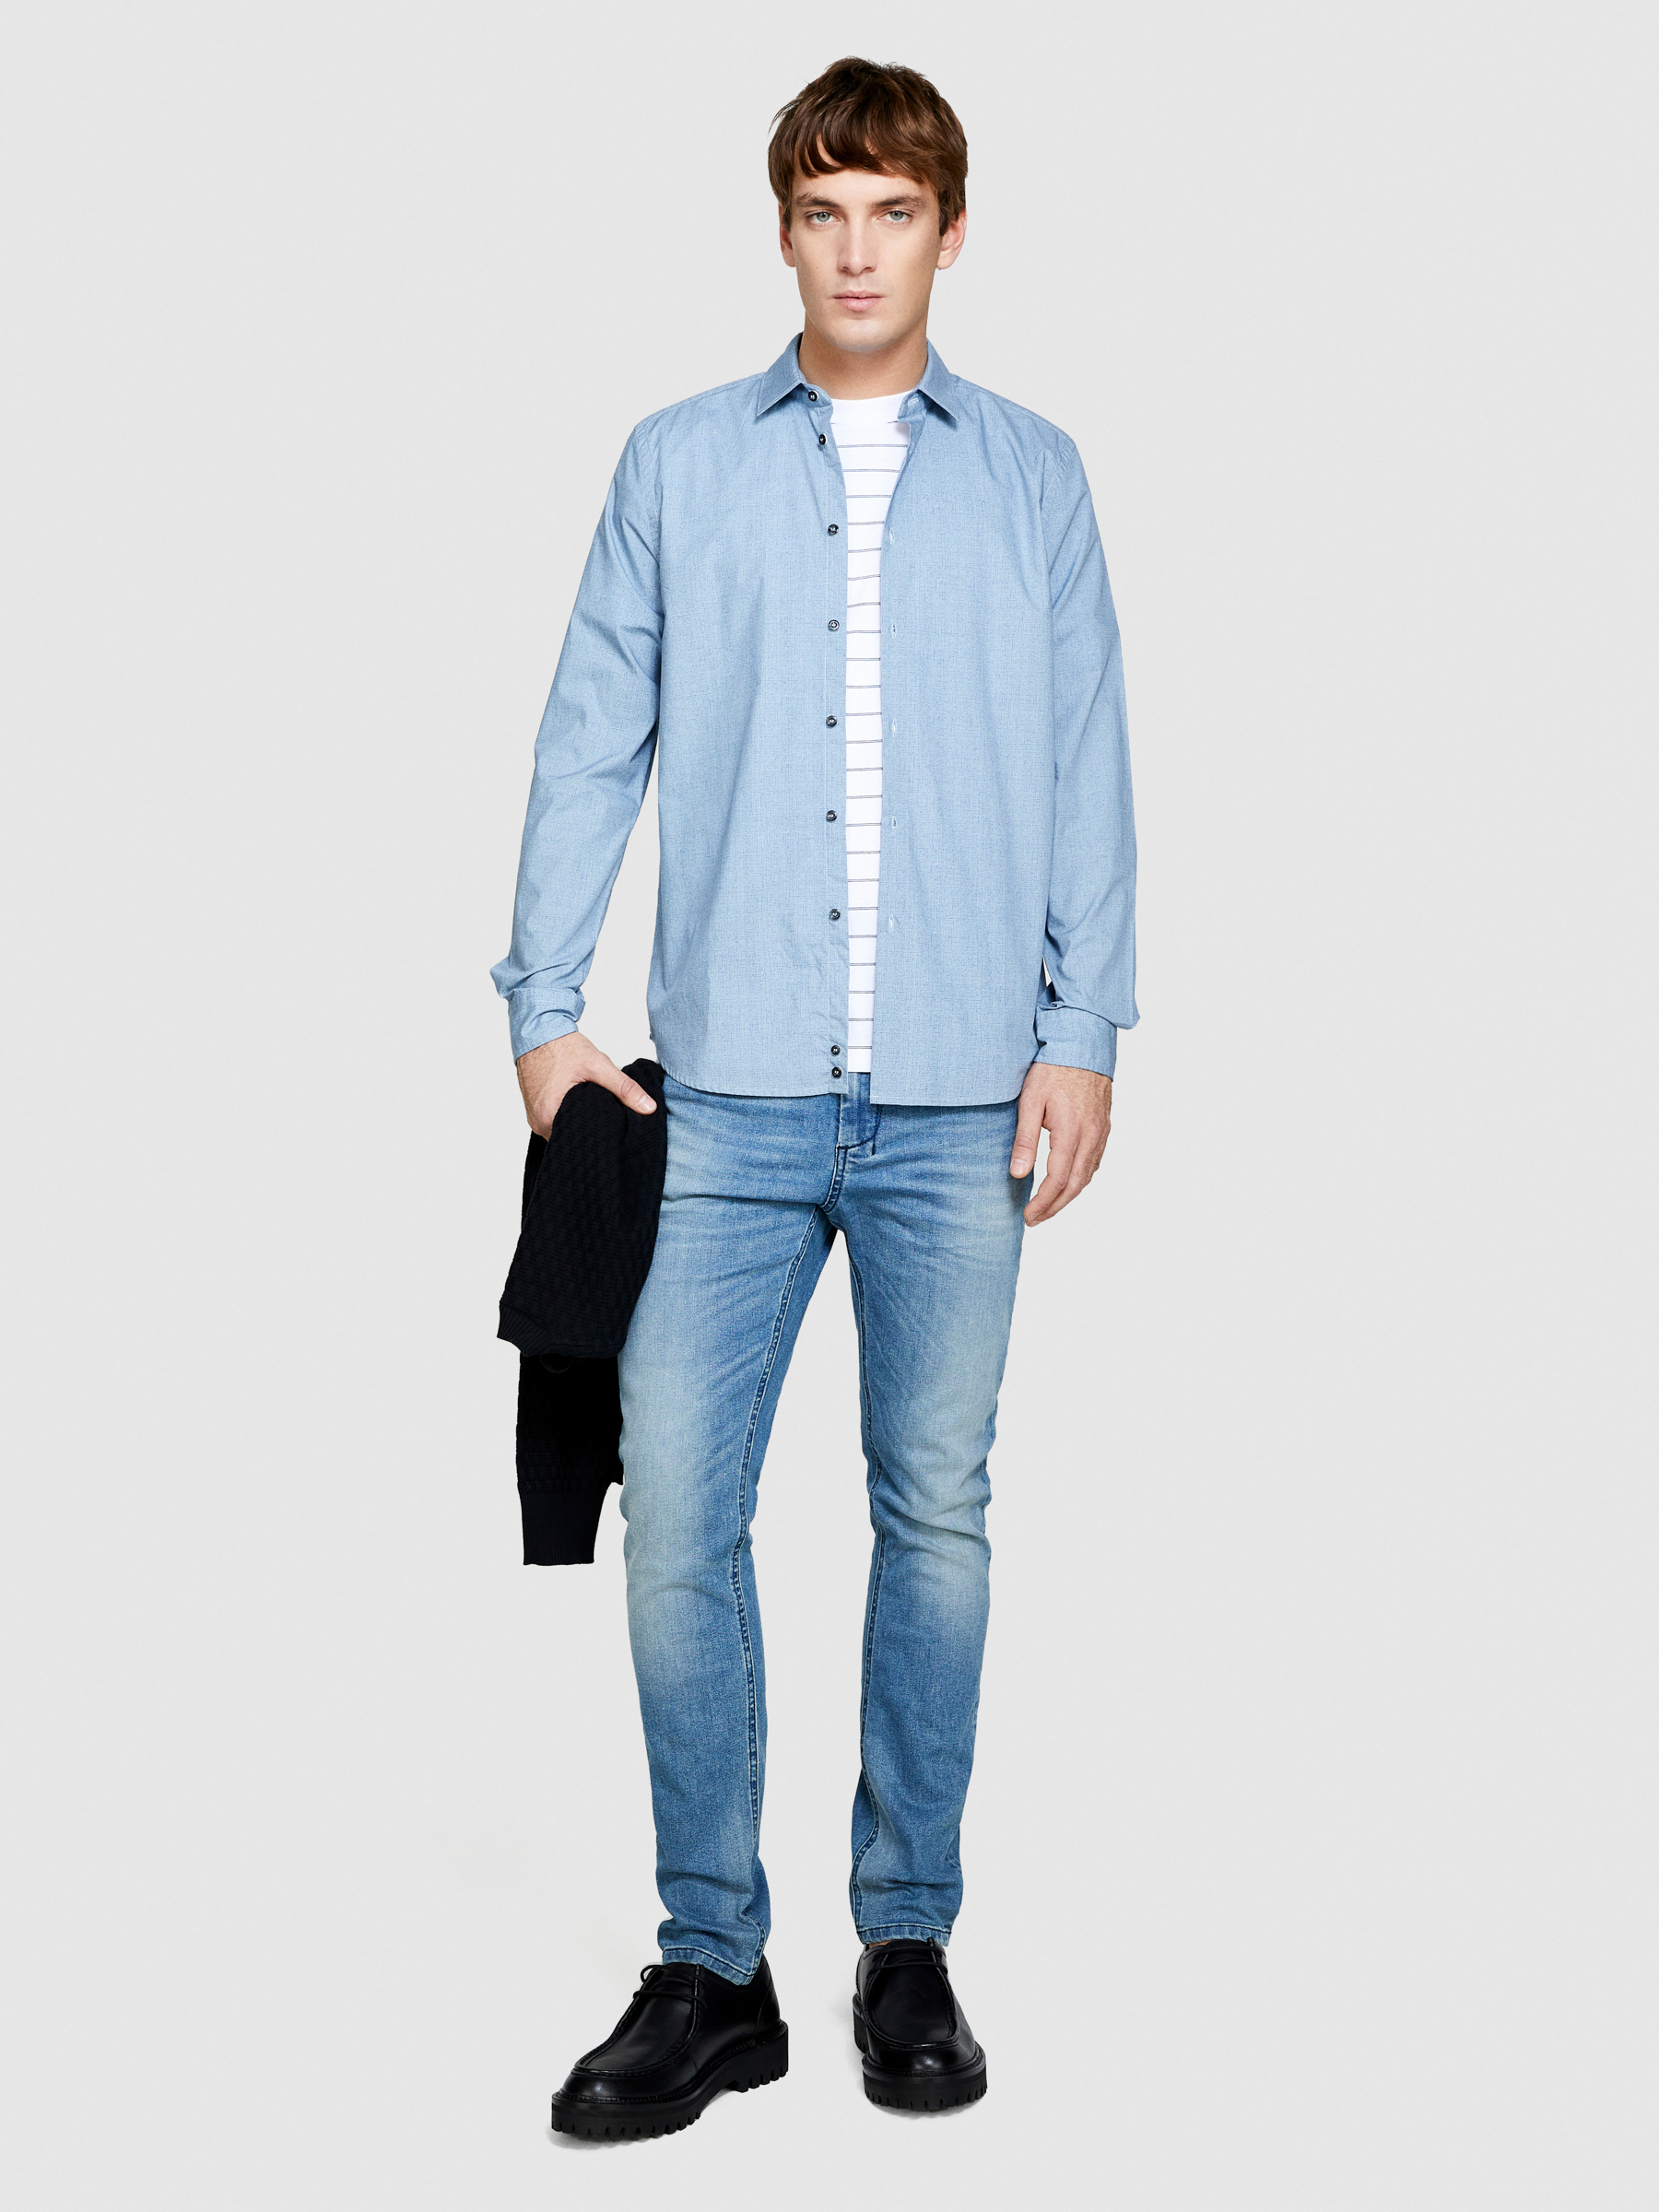 Sisley - Printed Shirt, Man, Light Blue, Size: 42